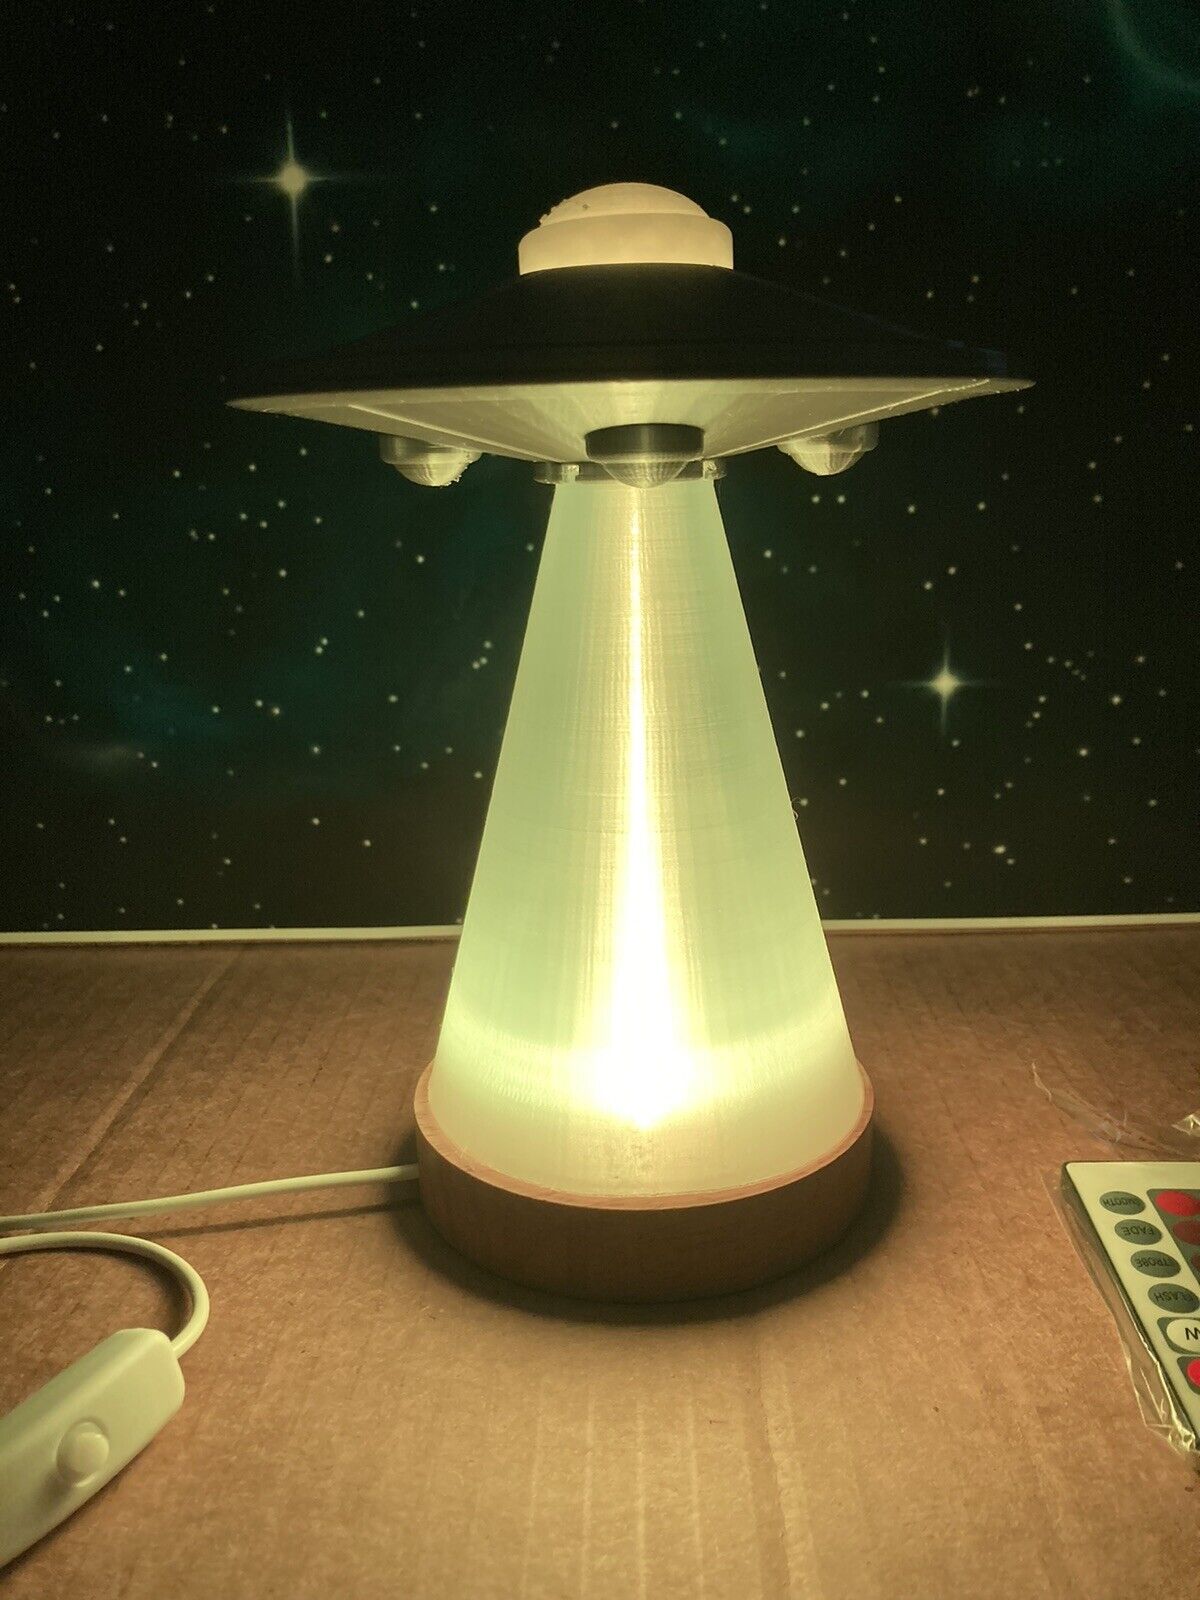 UFO Desk Lamp,Alien Desk Lamp,Space Ship Lamp,Alien Lamp,X Files,